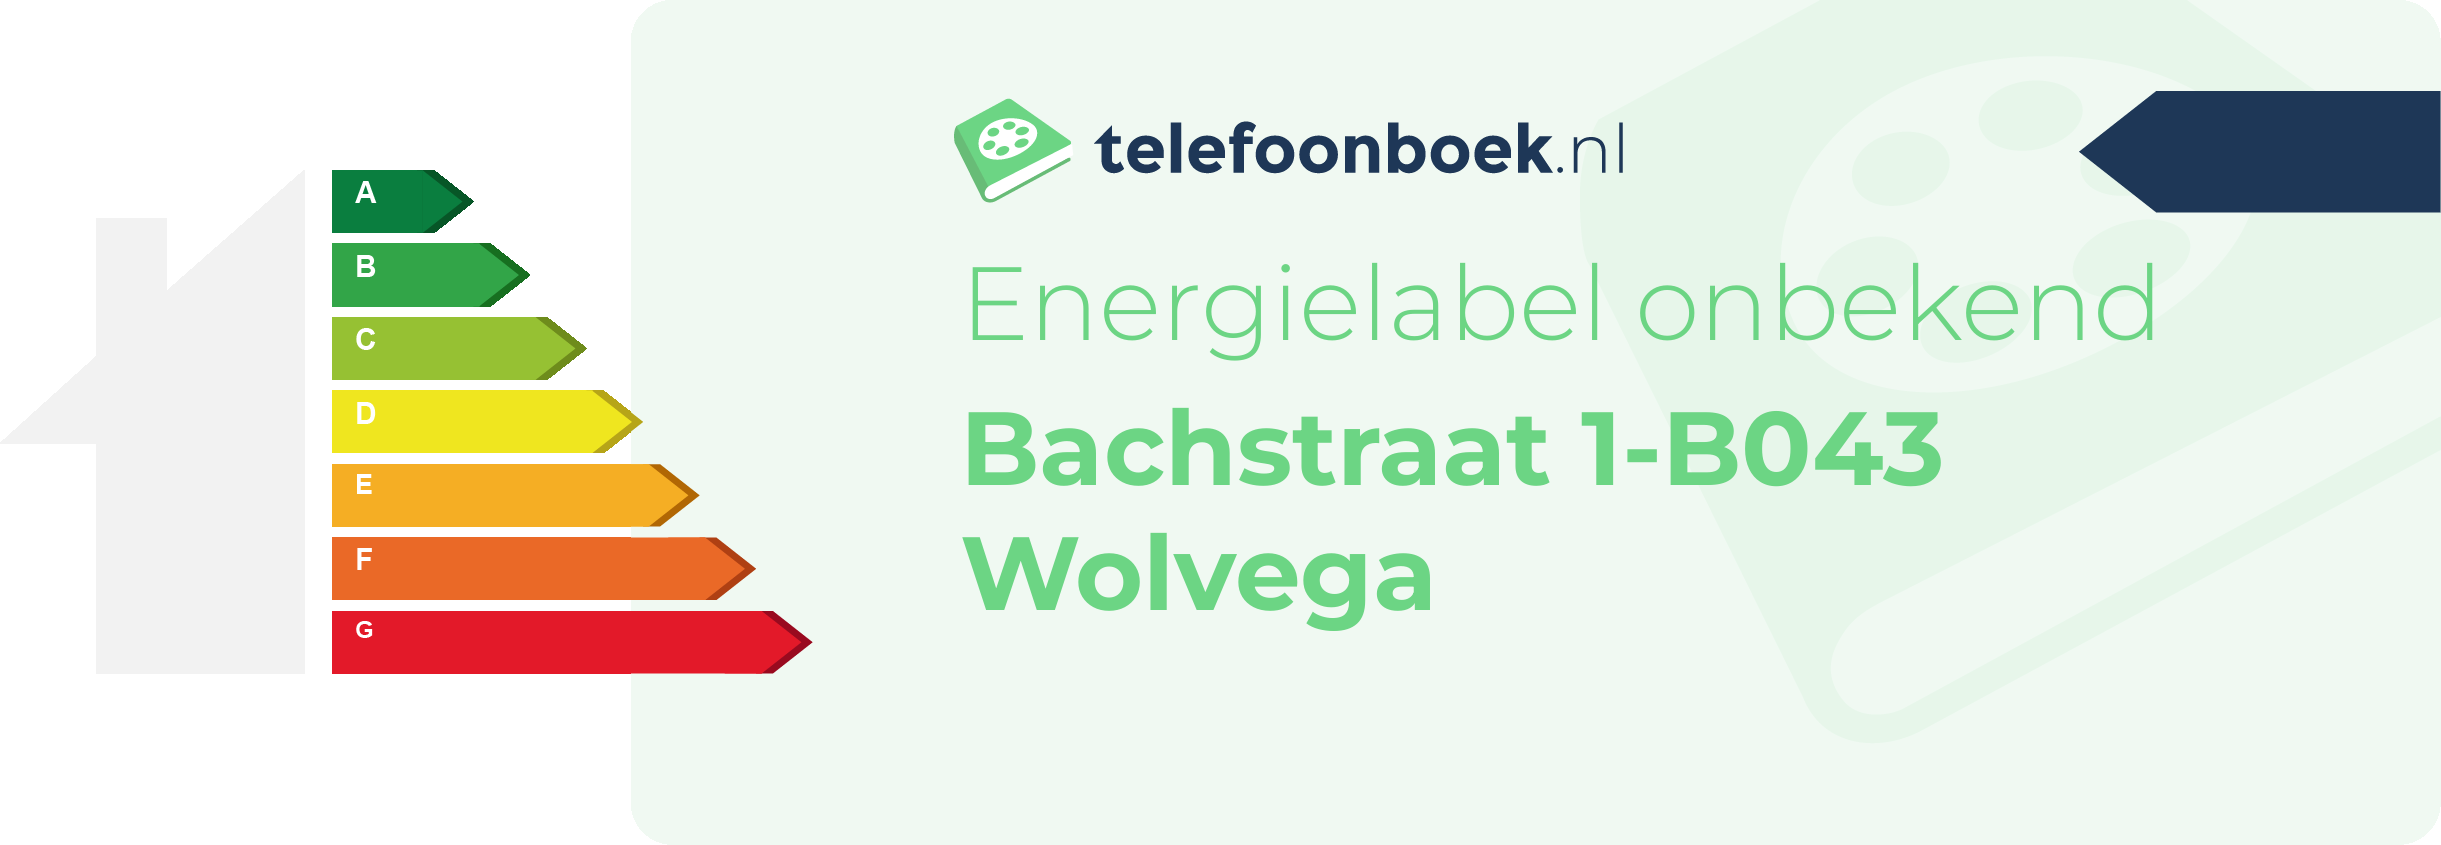 Energielabel Bachstraat 1-B043 Wolvega